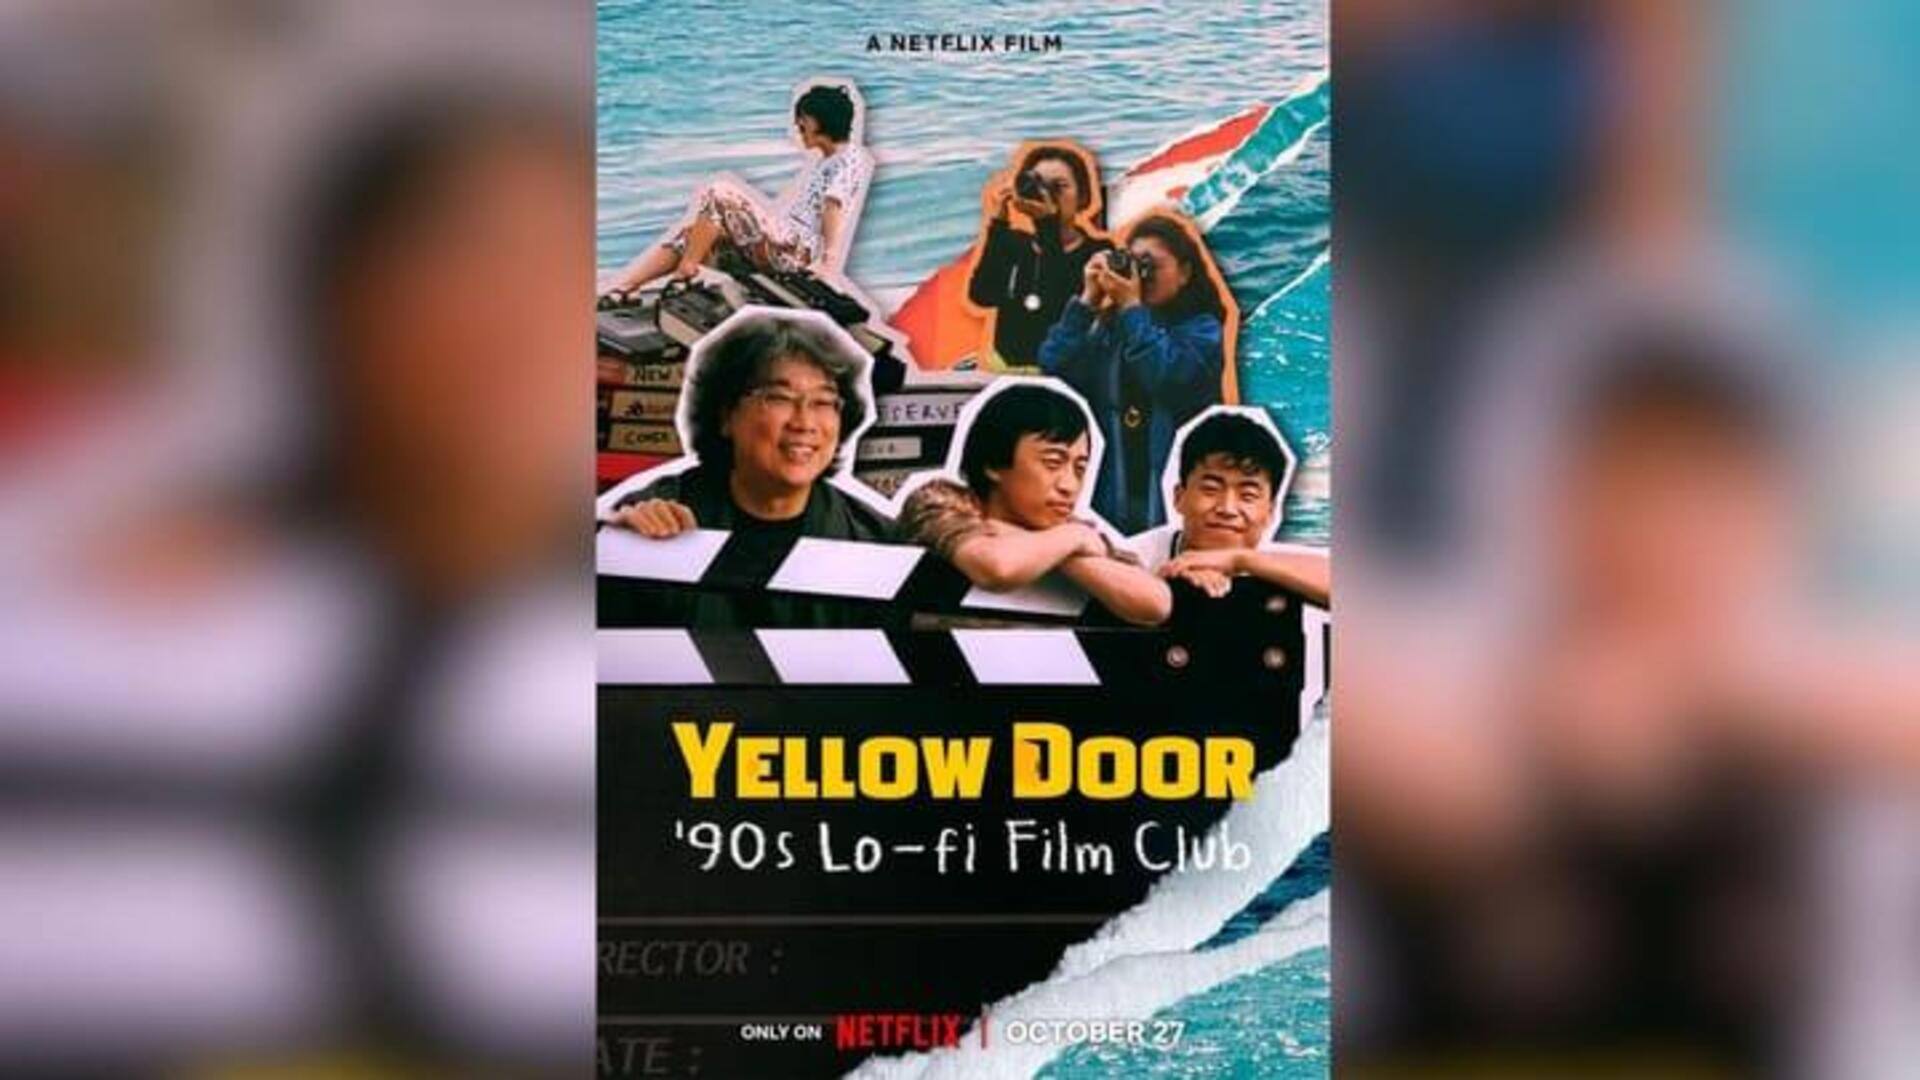 Ulasan Lengkap Tentang Film Dokumenter 'Yellow Door' Karya Bong Joon-ho